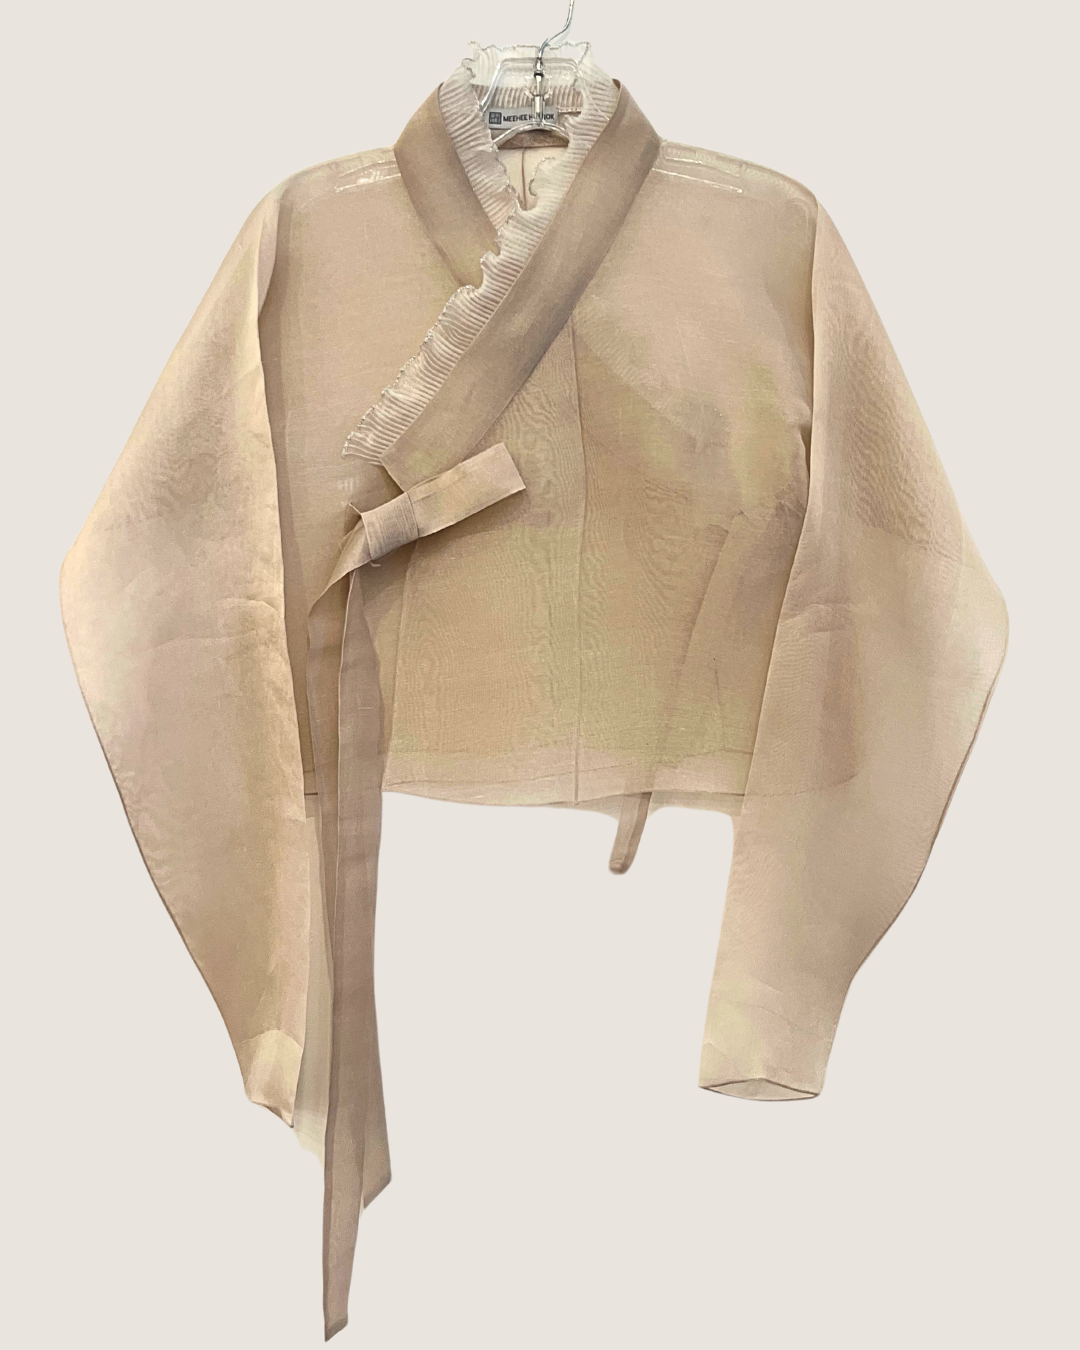 Modern jeogori Jacket with ruffled collar